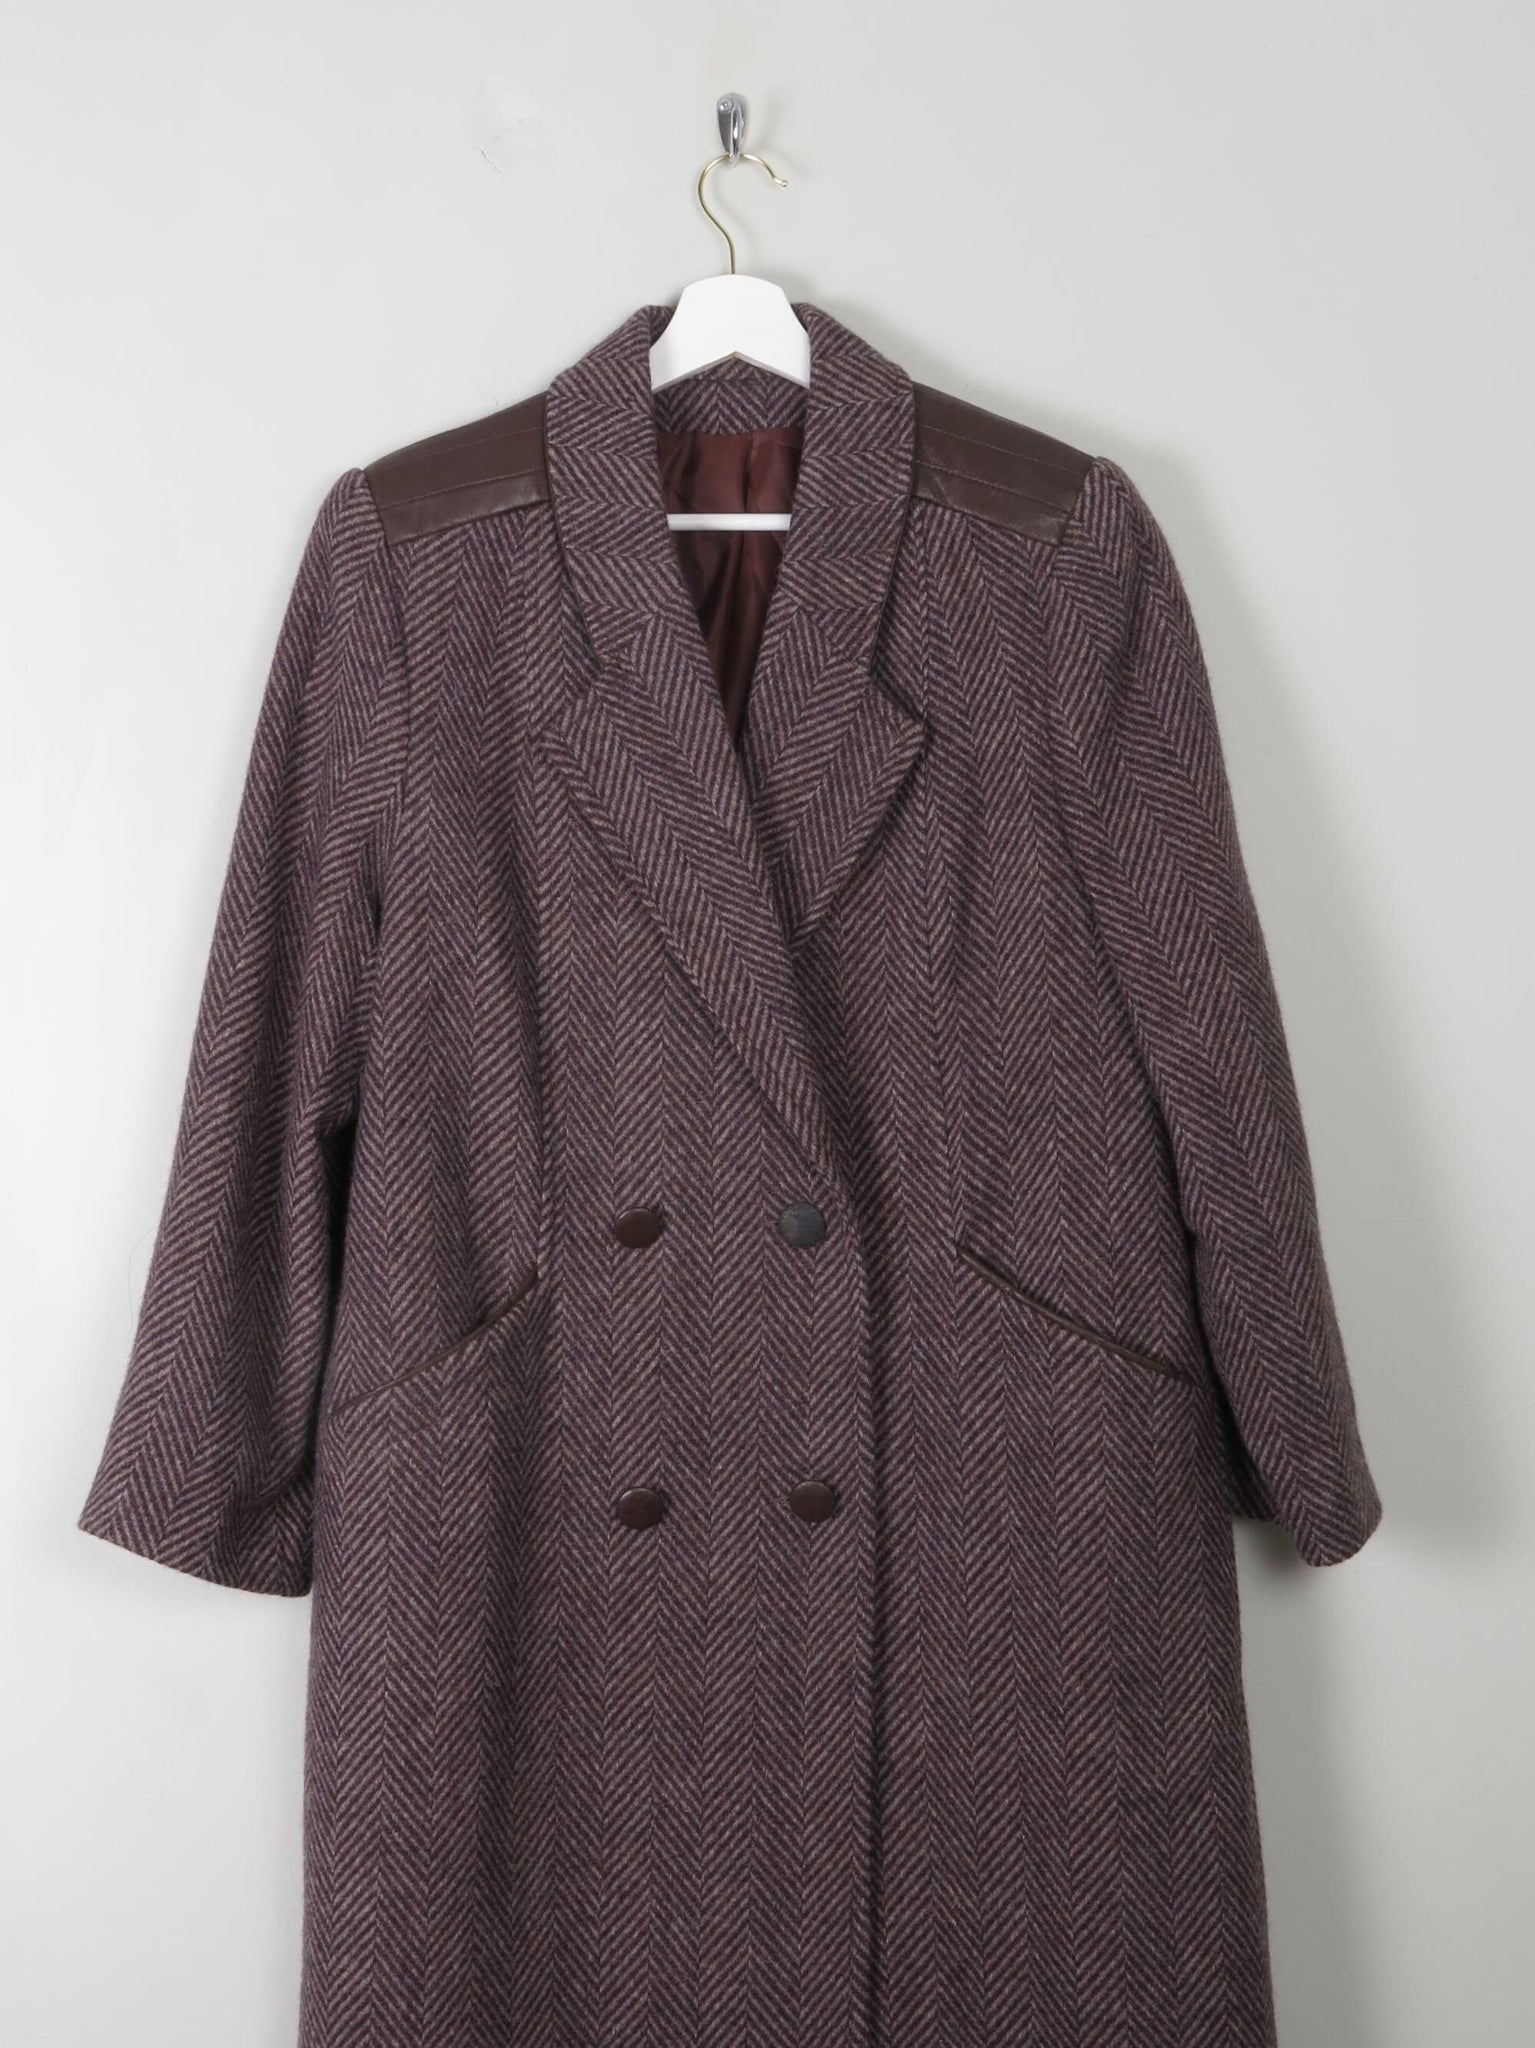 Women's Vintage Brown Tweed Coat M - The Harlequin